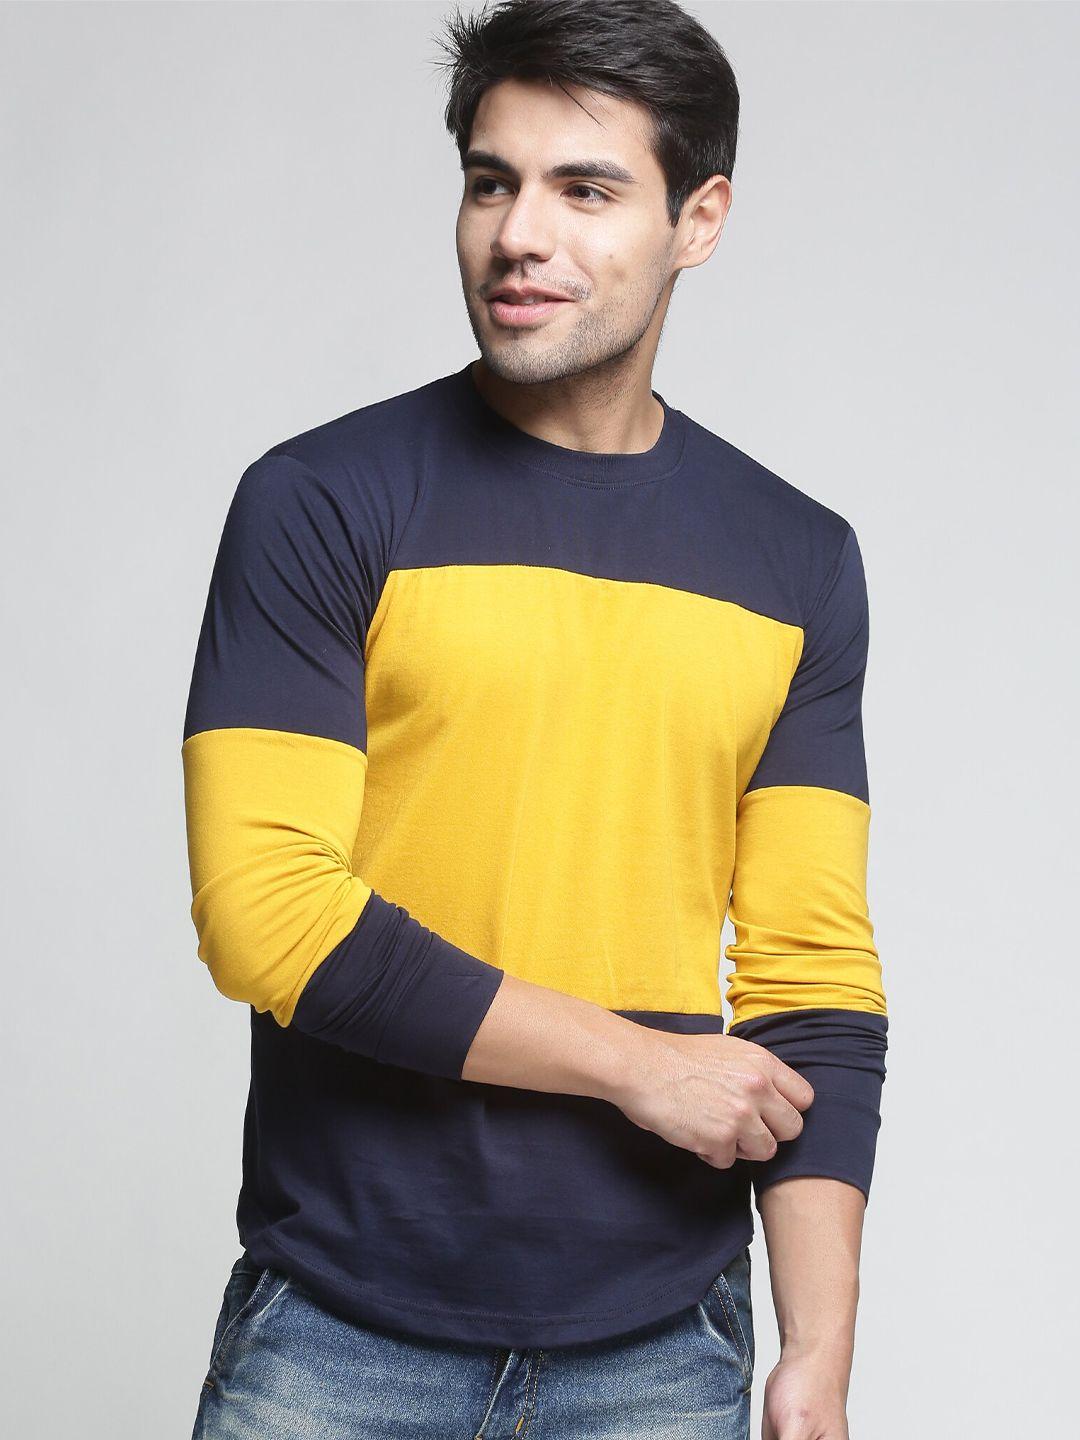 trends tower men navy blue & yellow colourblocked cotton t-shirt